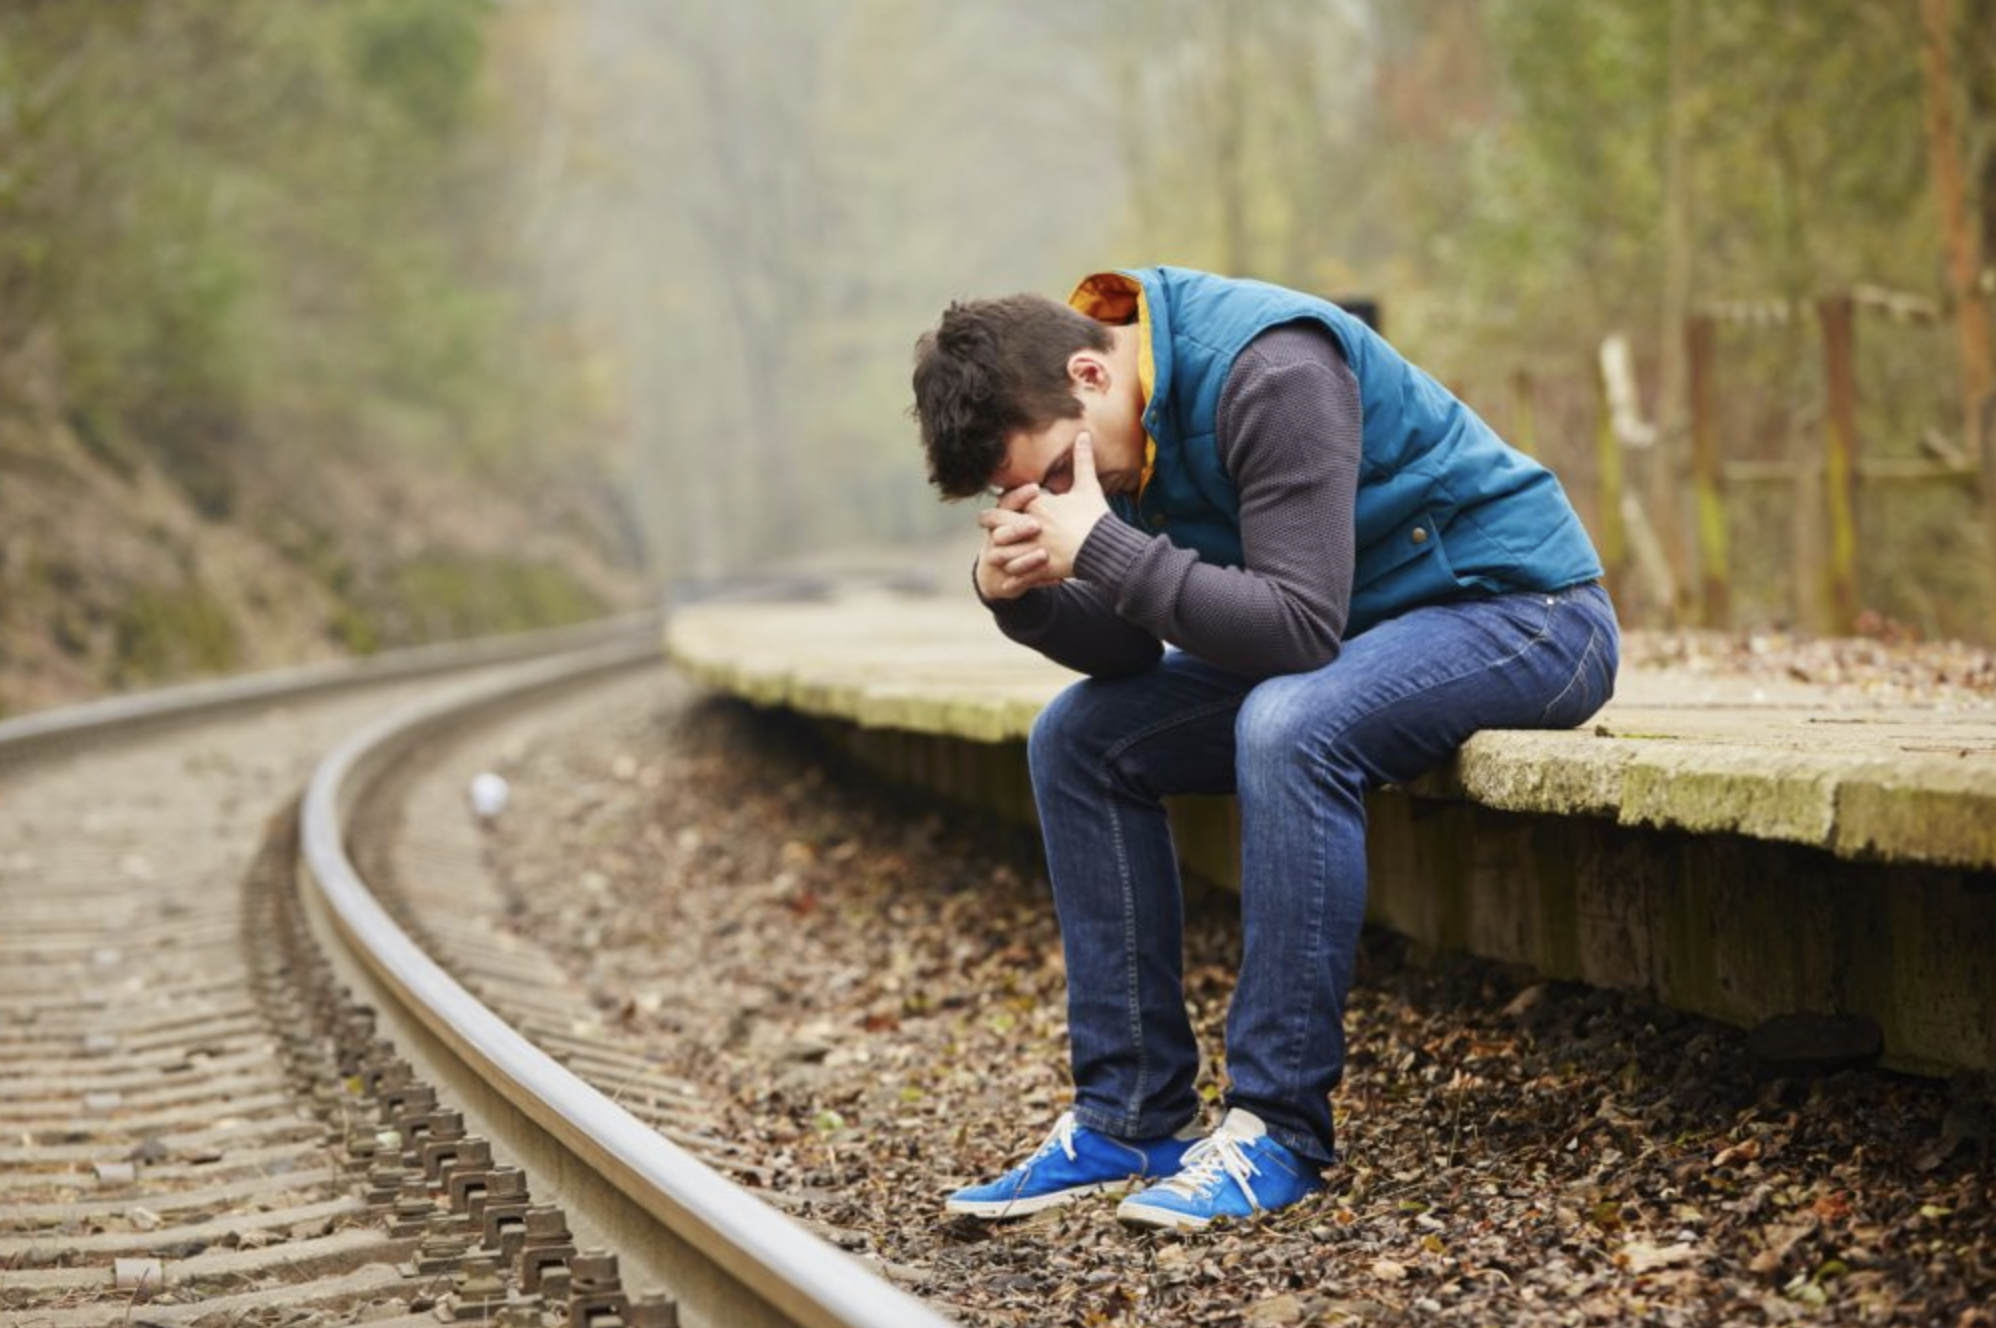 Depressed young man sitting alongside railroad track